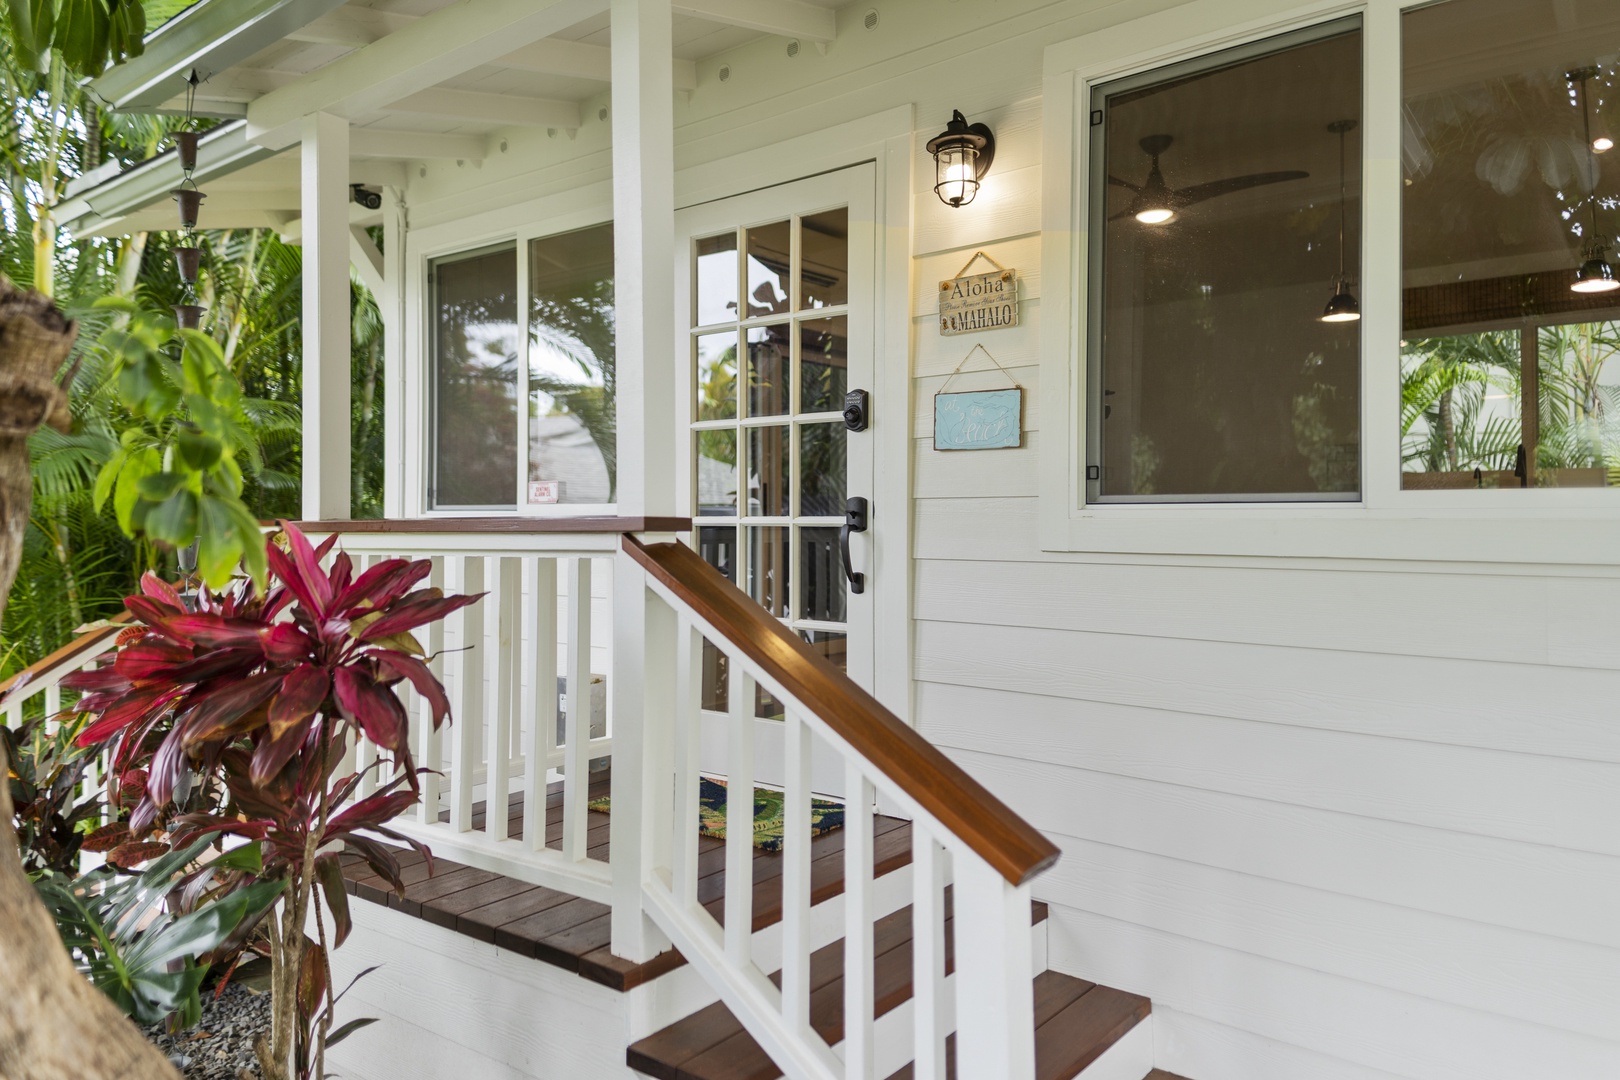 Kailua Vacation Rentals, Lanikai Ohana Hale - Front Entrance